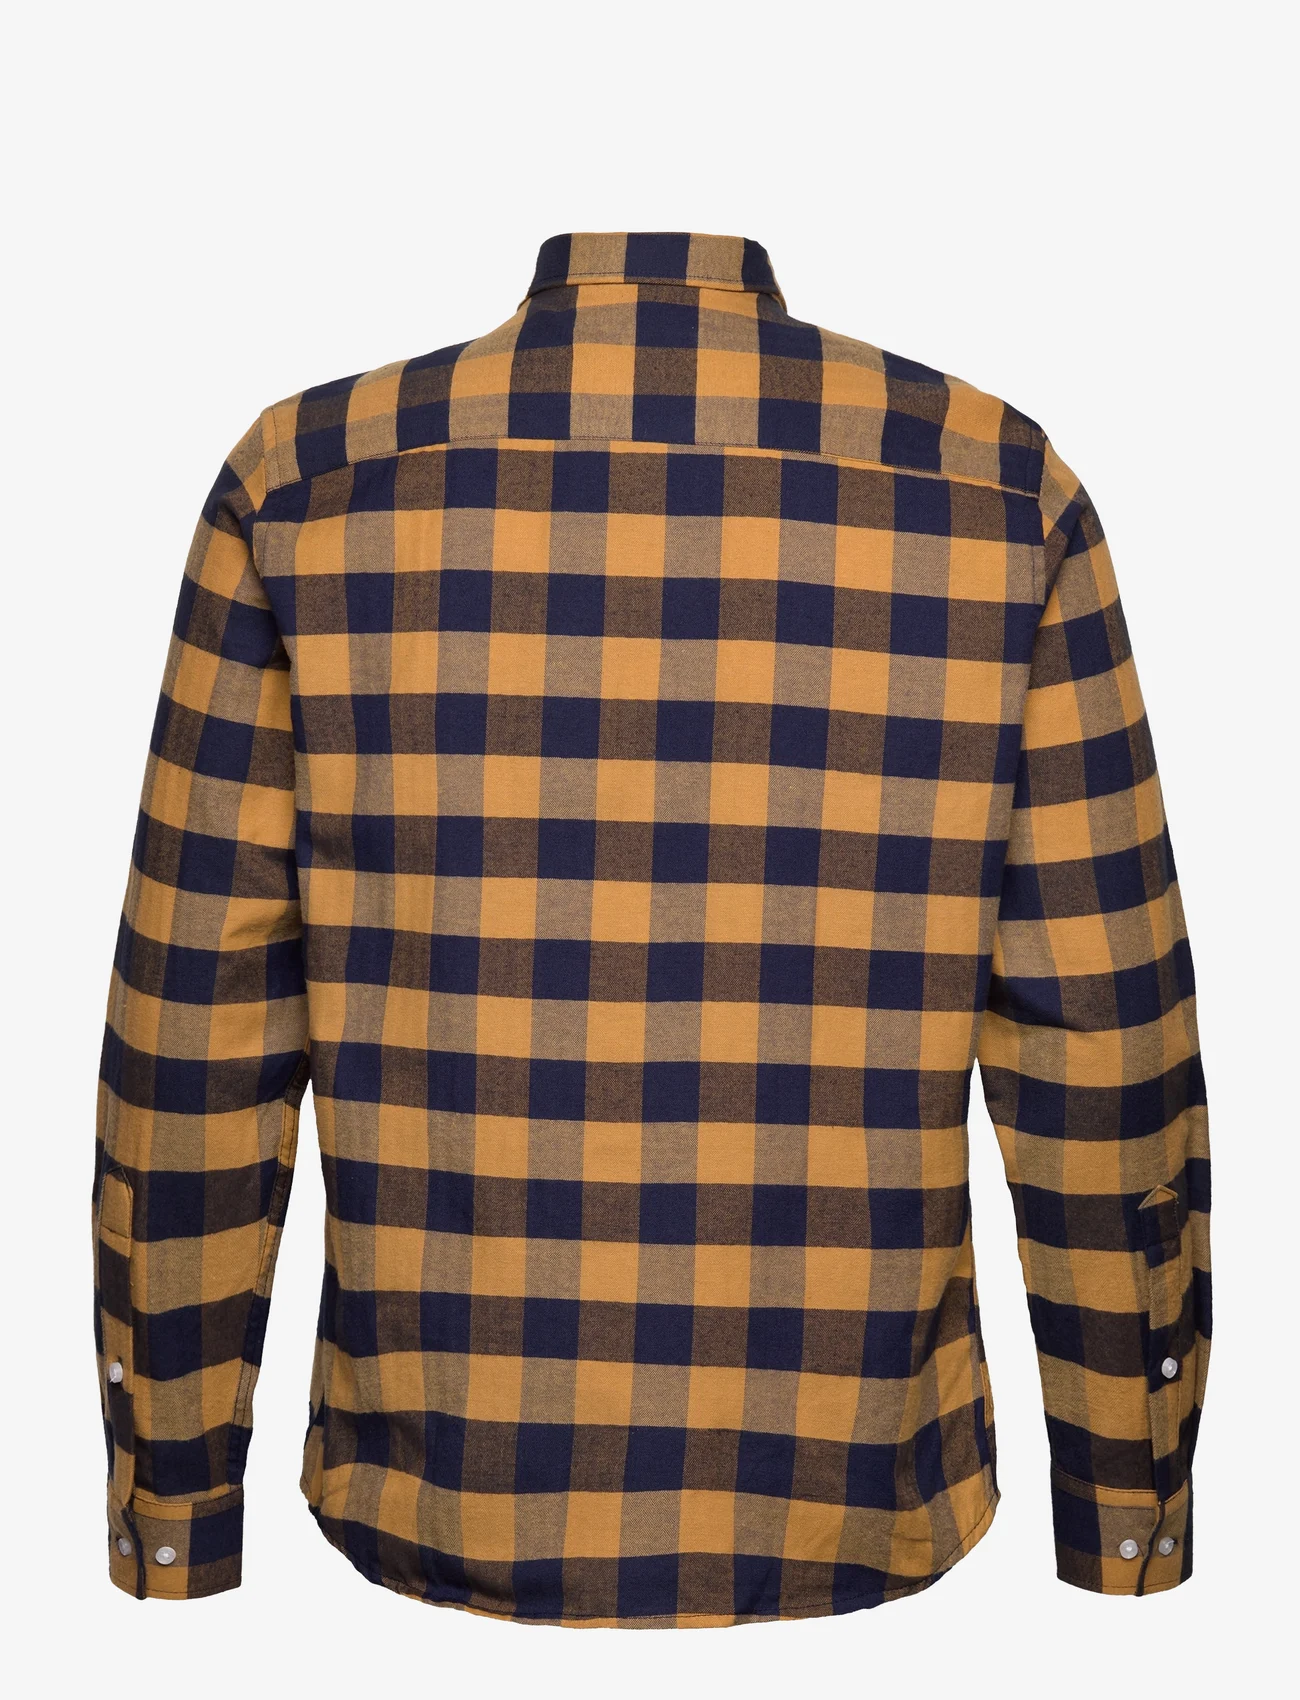 Clean Cut Copenhagen - Sälen Flannel 11 LS - languoti marškiniai - dark khaki - 1